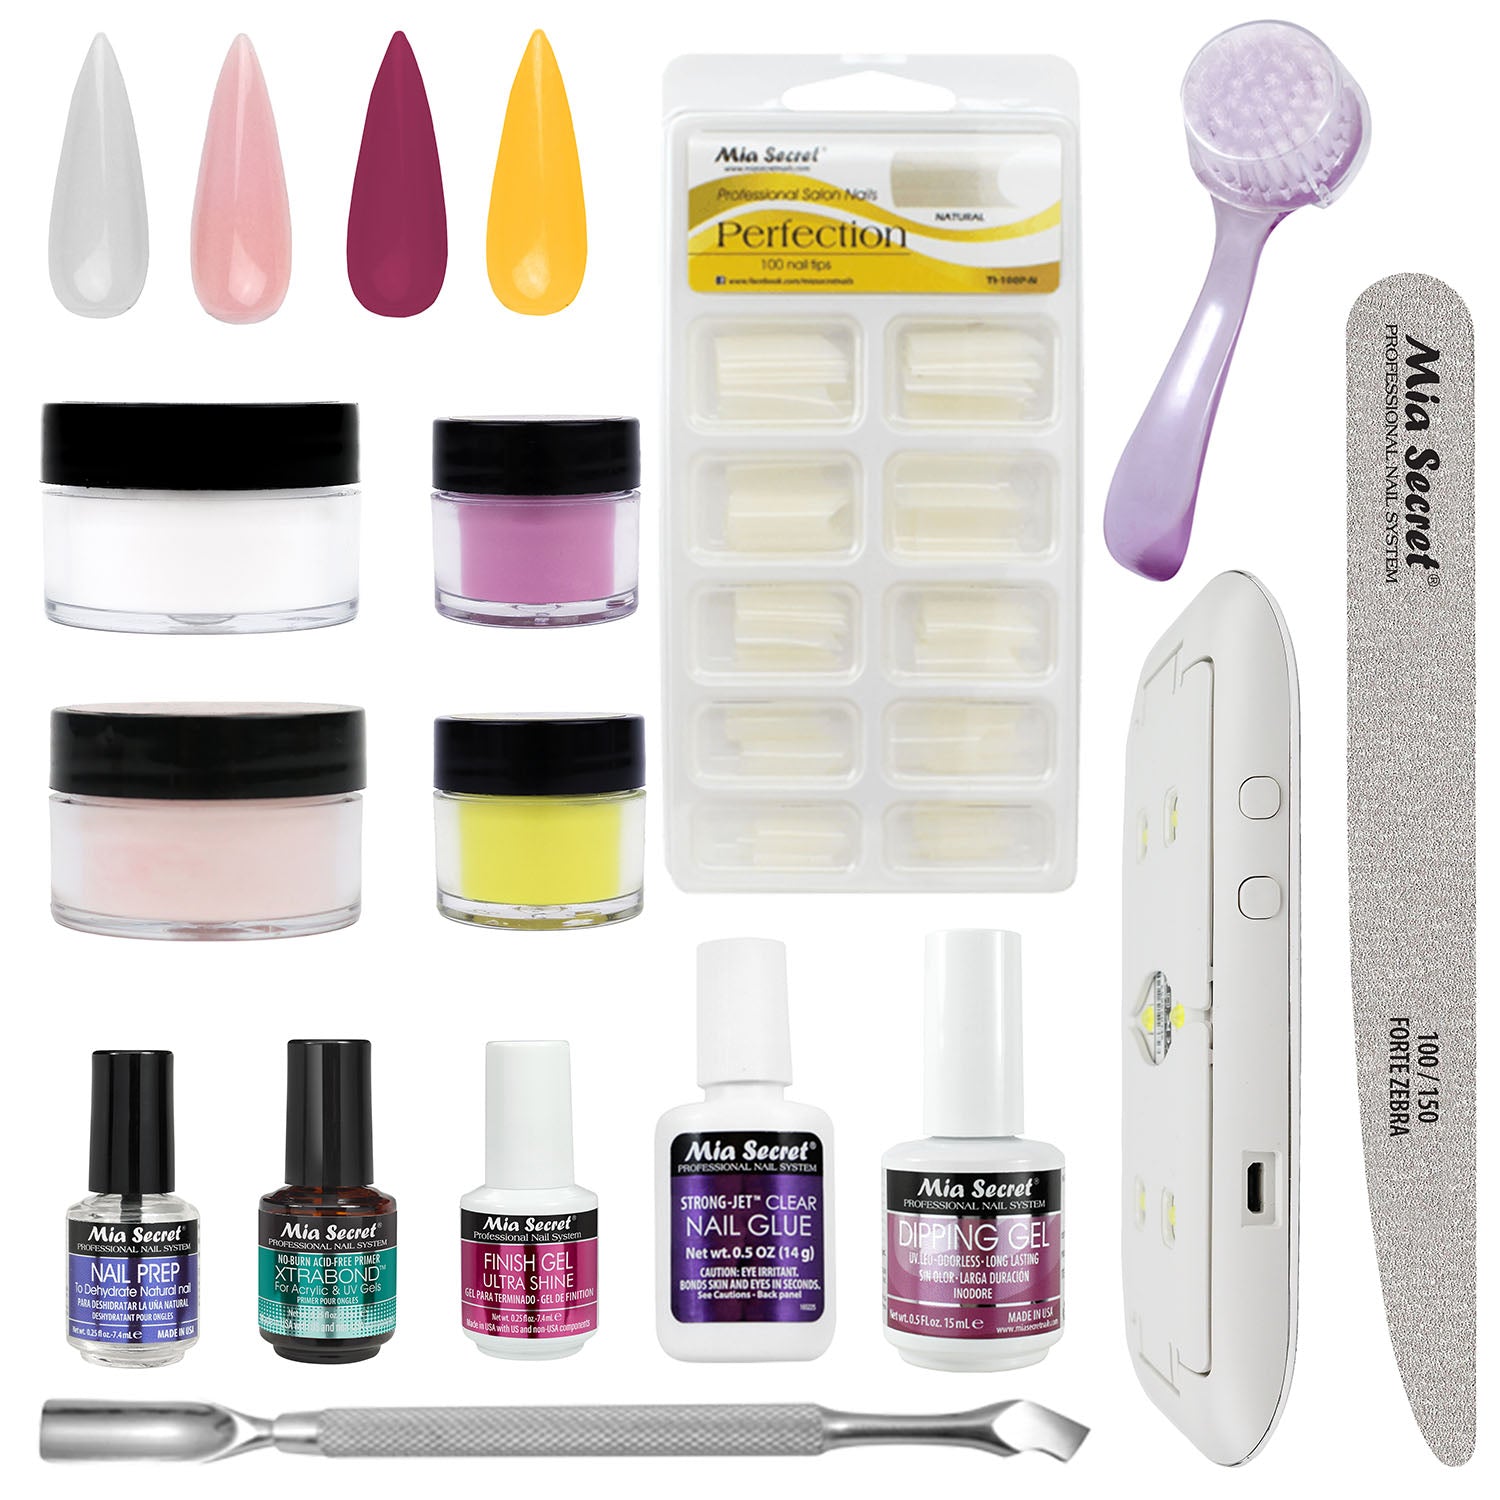 Beauty Secrets Dip Powder Brush Cleaner - dip powder nails, dip